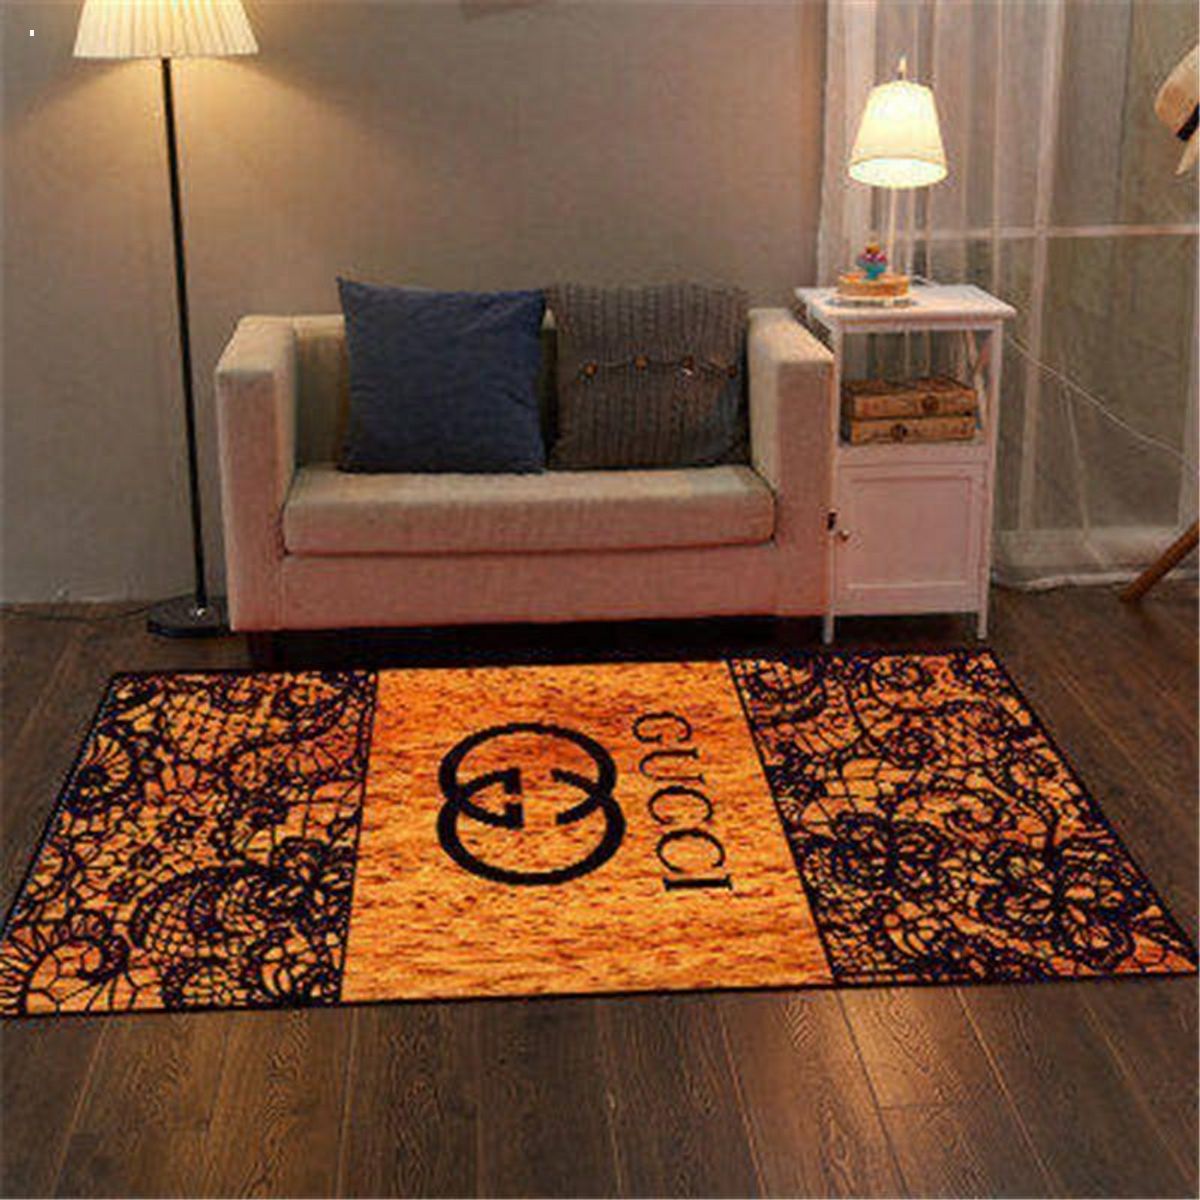 Guccui Orange Mix Black Luxury Brand Carpet Rug Limited Edition